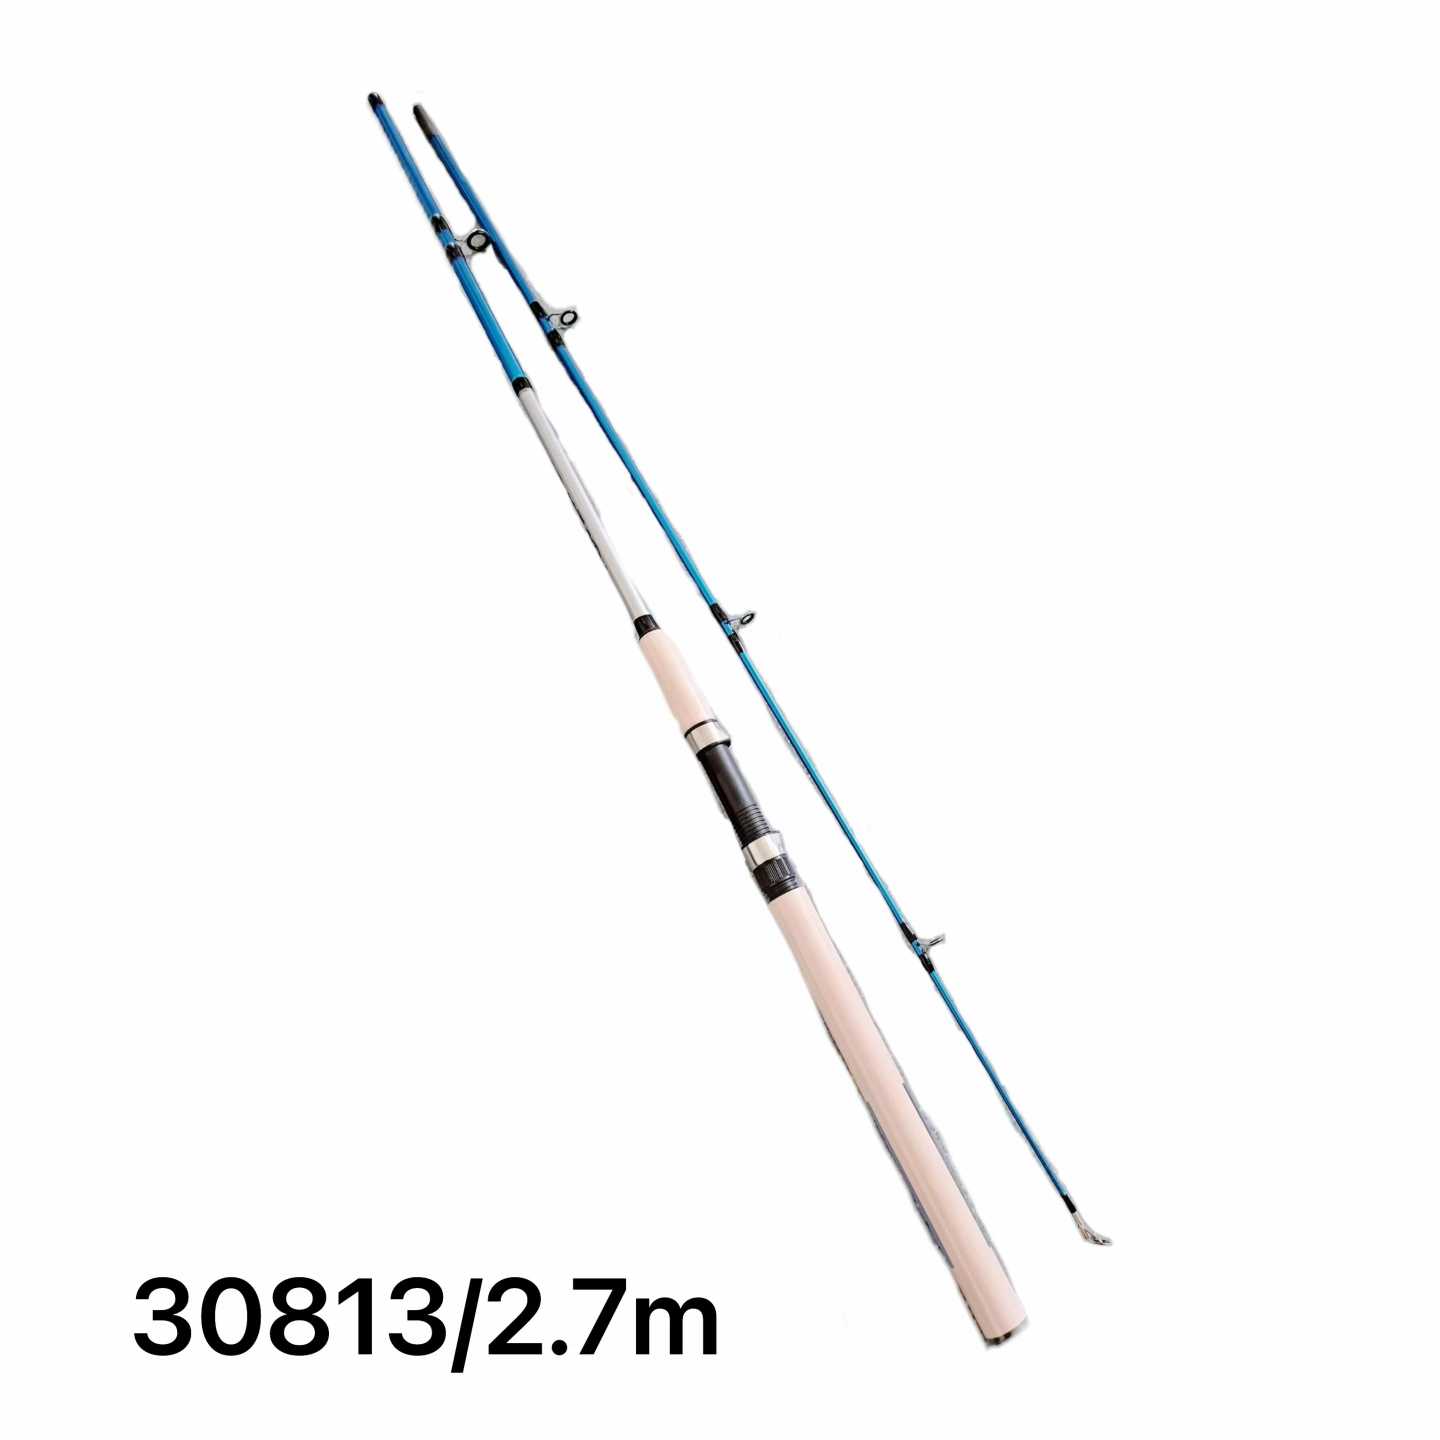 Fishing rod - Split - 2.7m - 30813